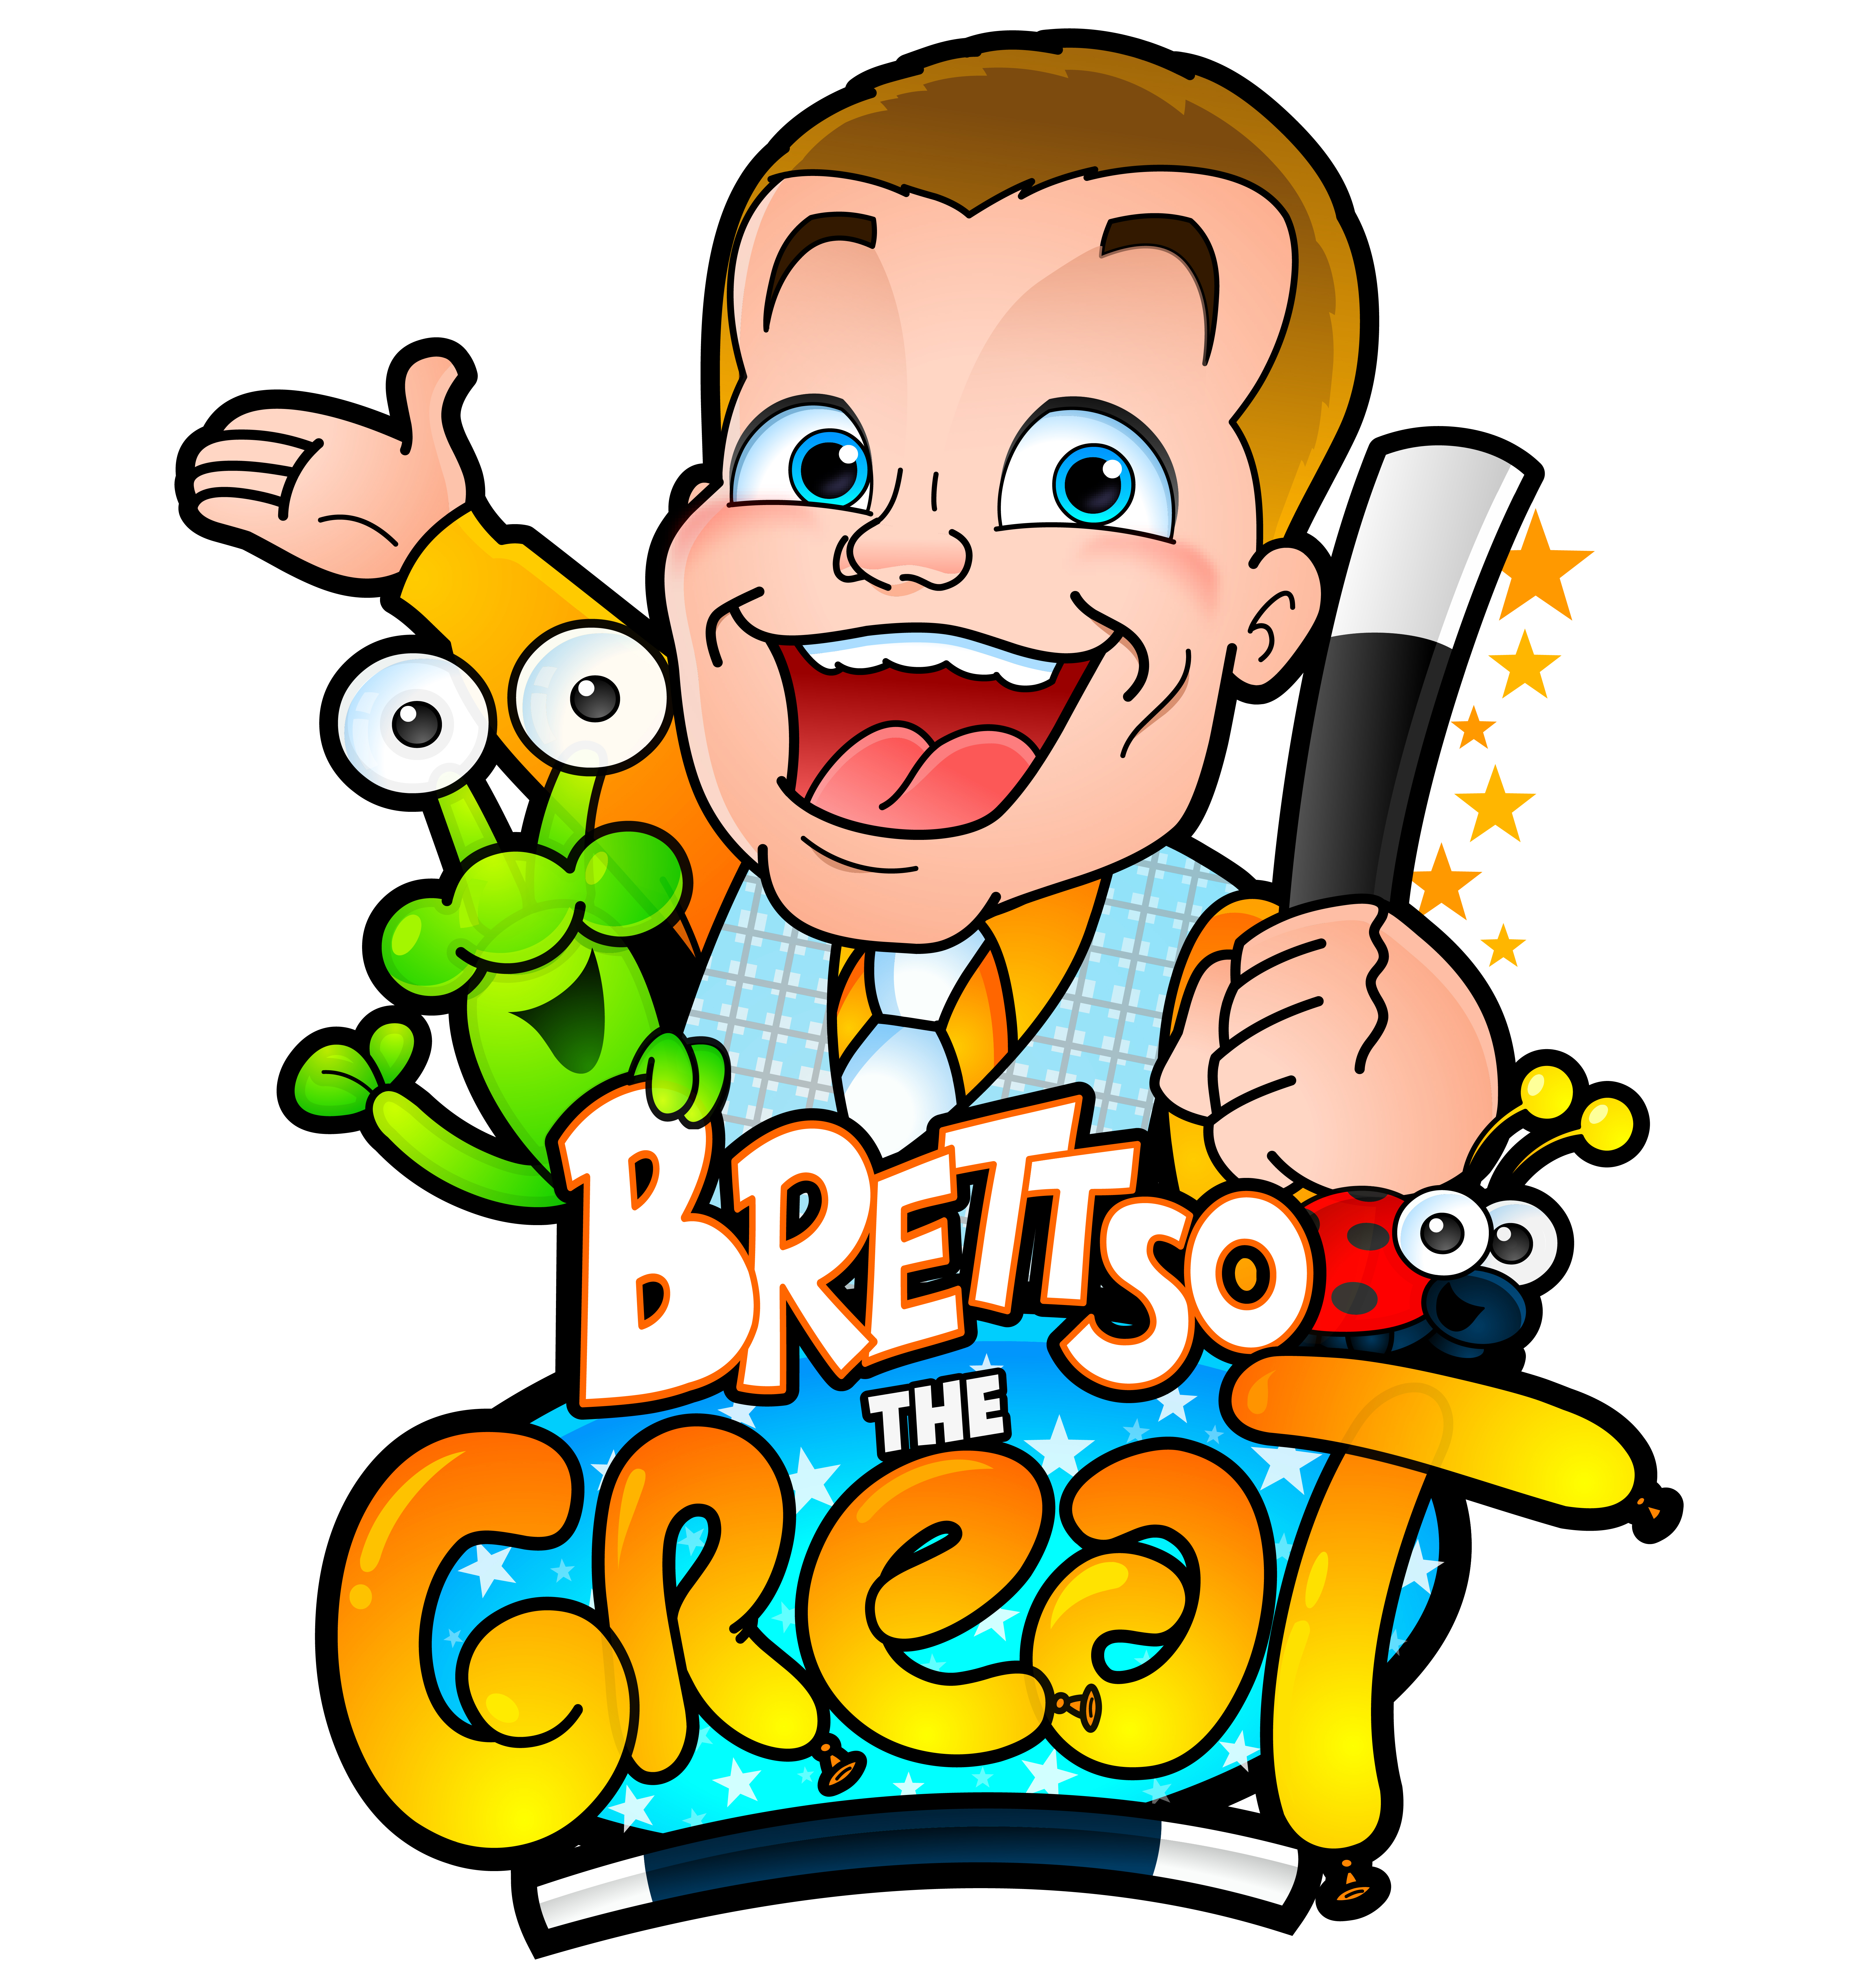 Brettso the Great